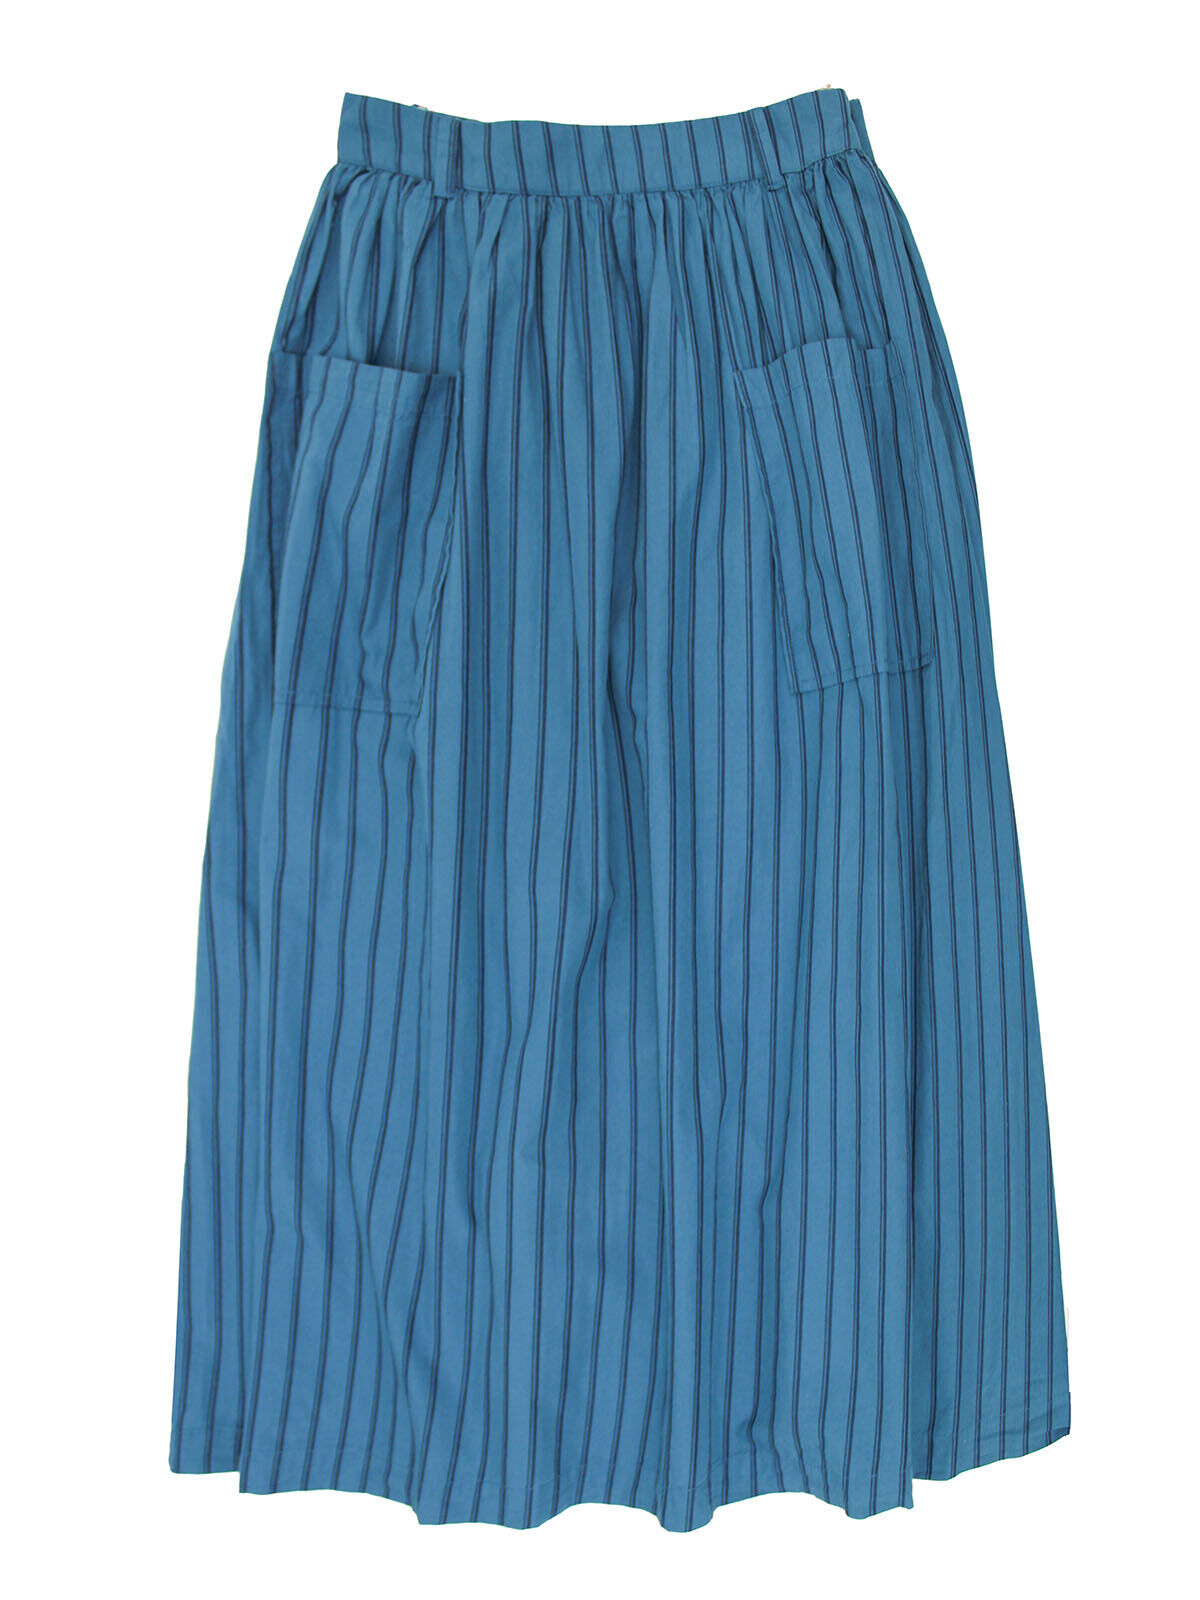 EX SEASALT Teal Stripe Swell Art Colony Skirt Sizes 10, 14, 16, 18, 20 RRP £65